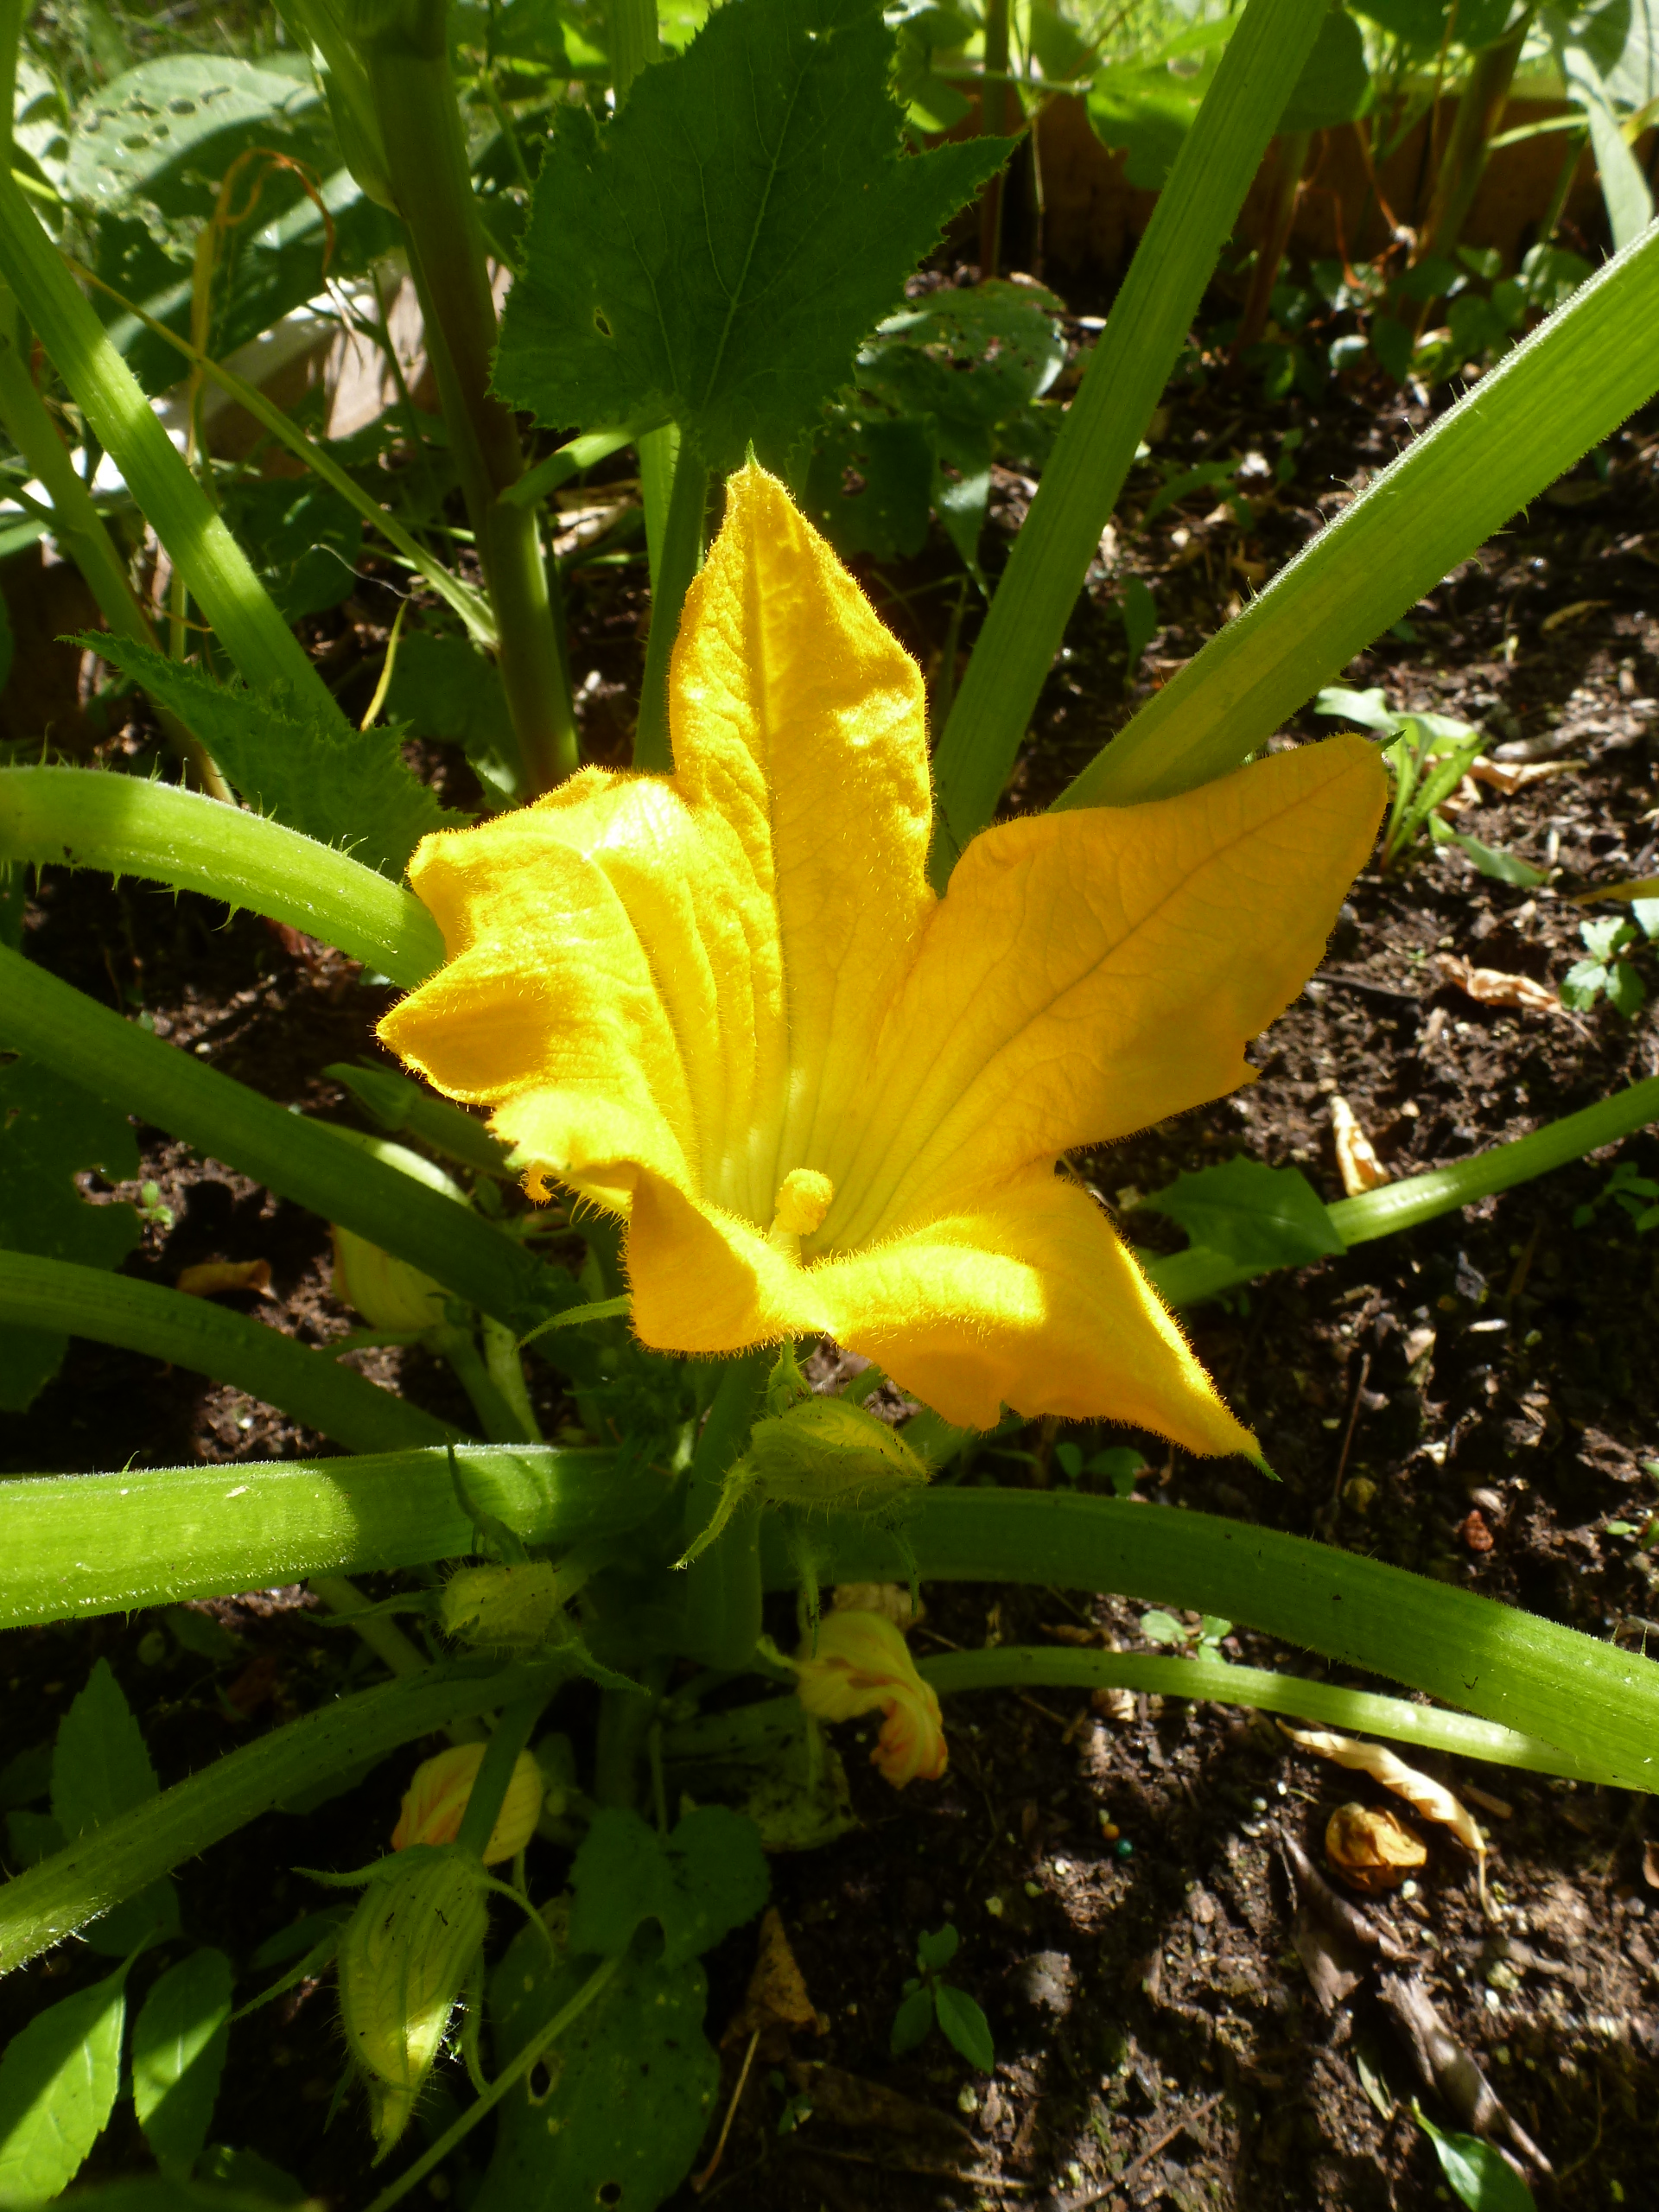 A squash blossom, still on the plant